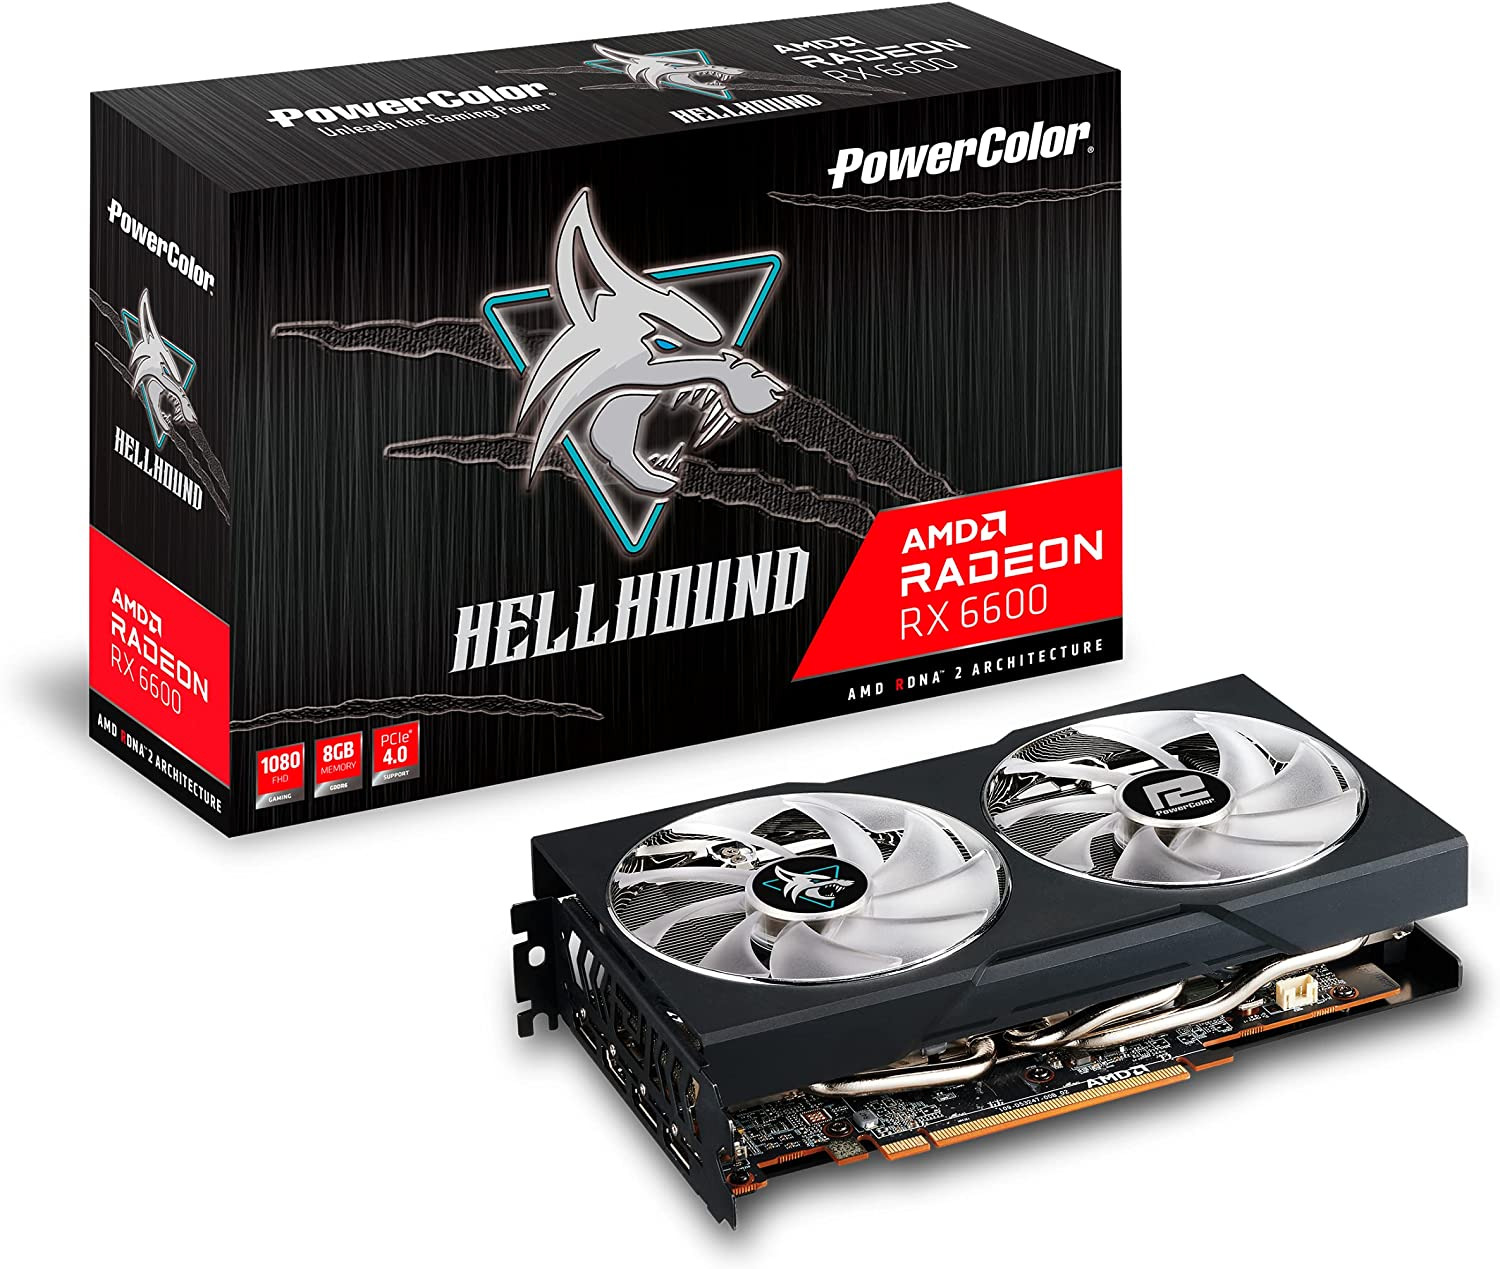 Hellhound AMD Radeon RX 6600 Graphics Card with 8GB GDDR6 Memory